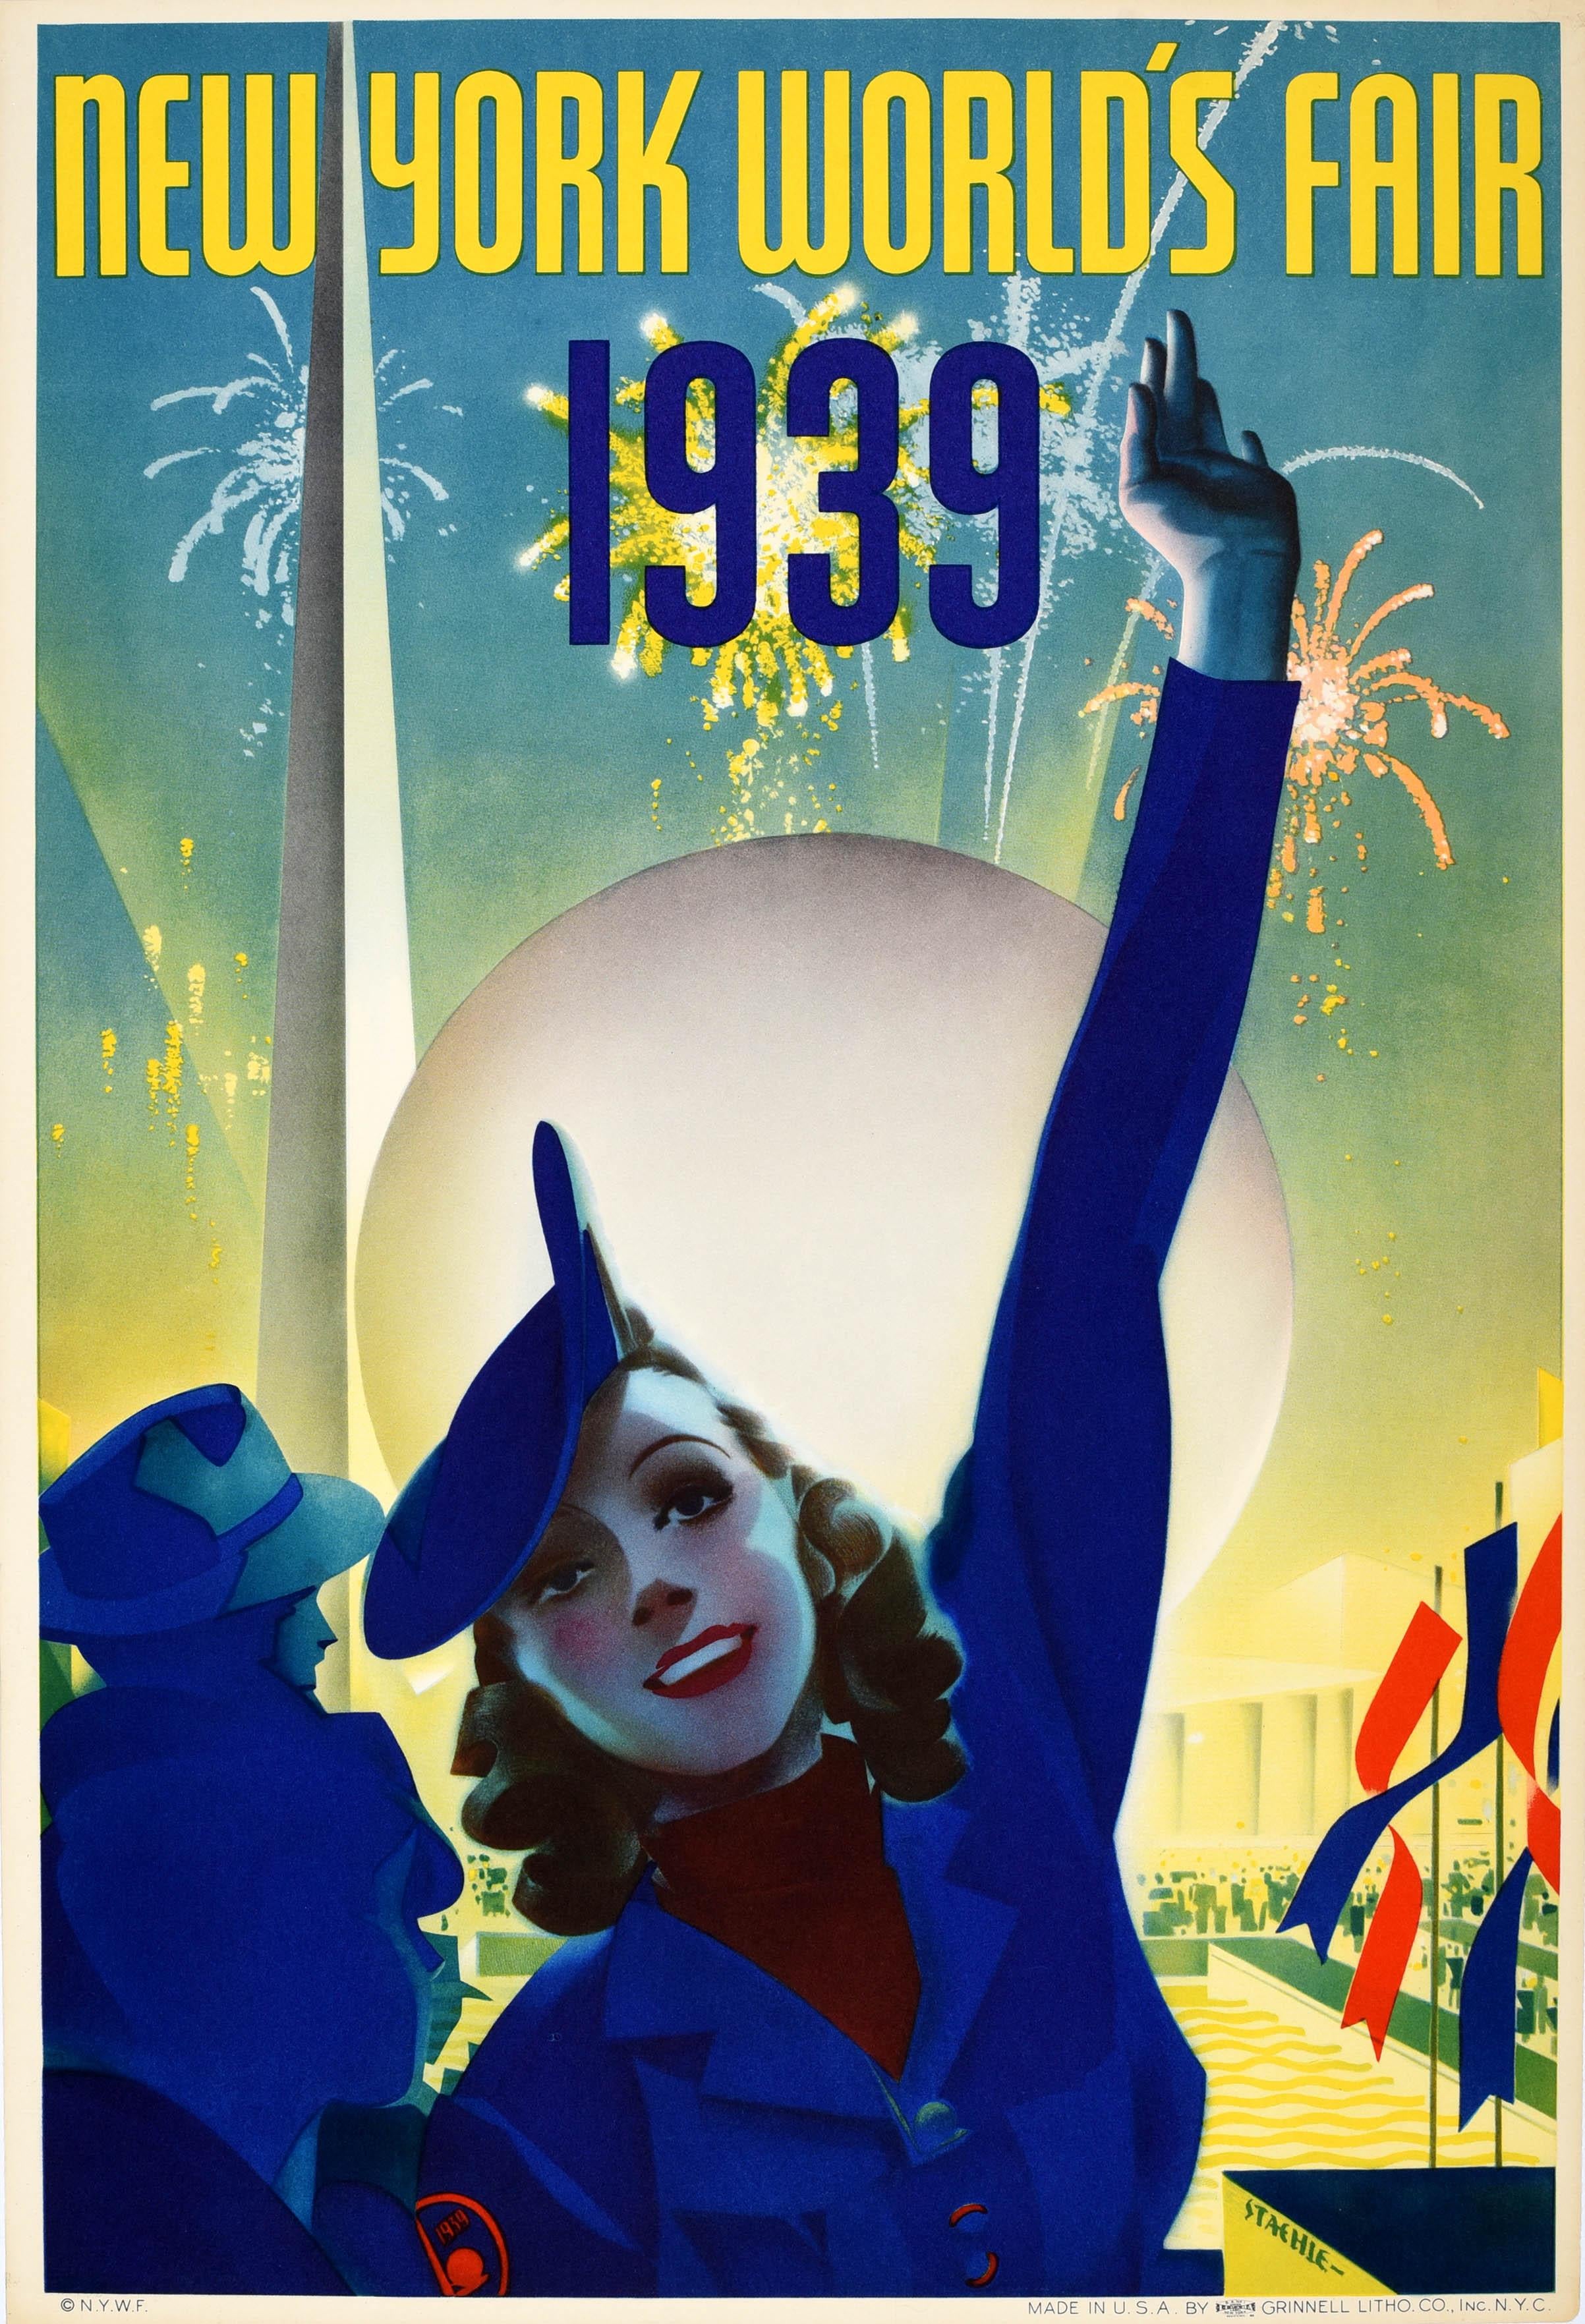 Albert Staehle Print - Original Vintage Poster New York World Fair 1939 Fireworks Art Deco Staehle USA